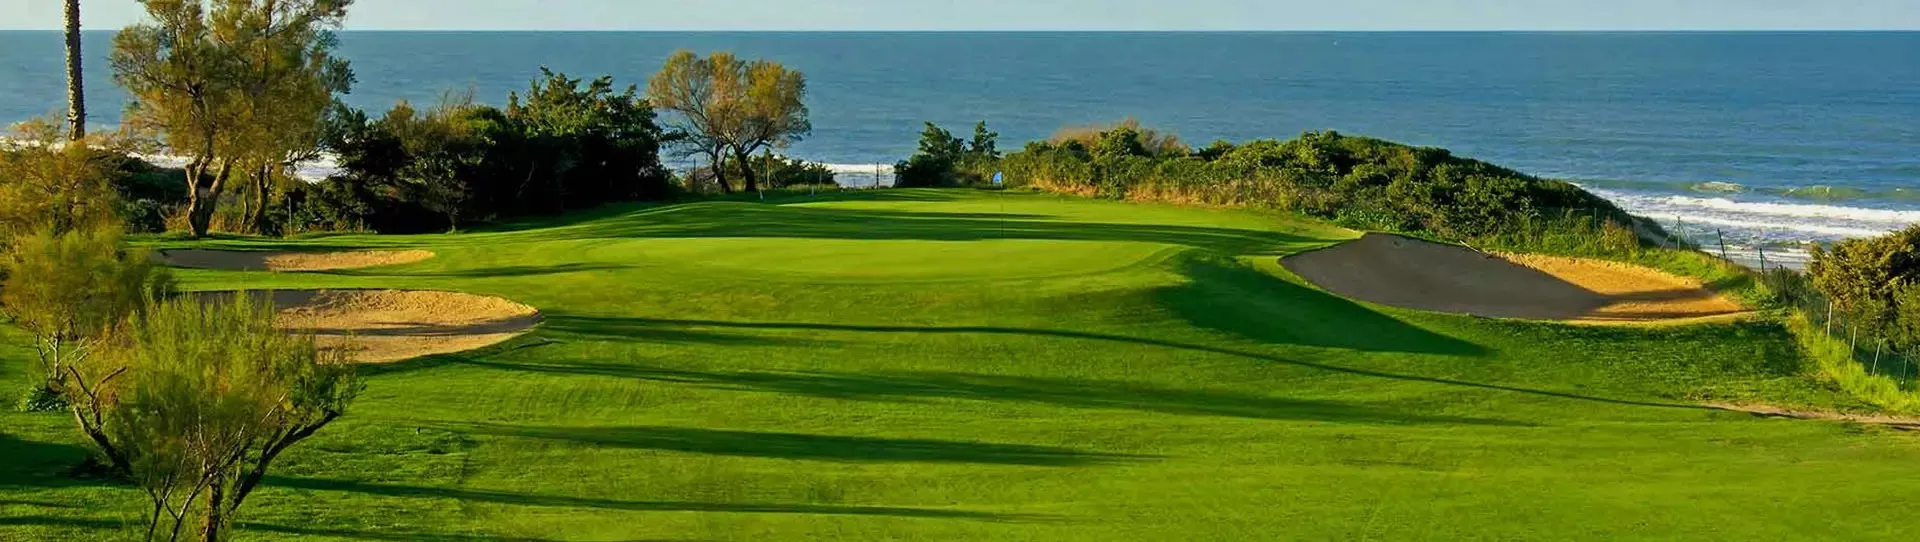 Spain golf courses - Real Novo Sancti Petri ''Pines & Sea'' - Photo 1